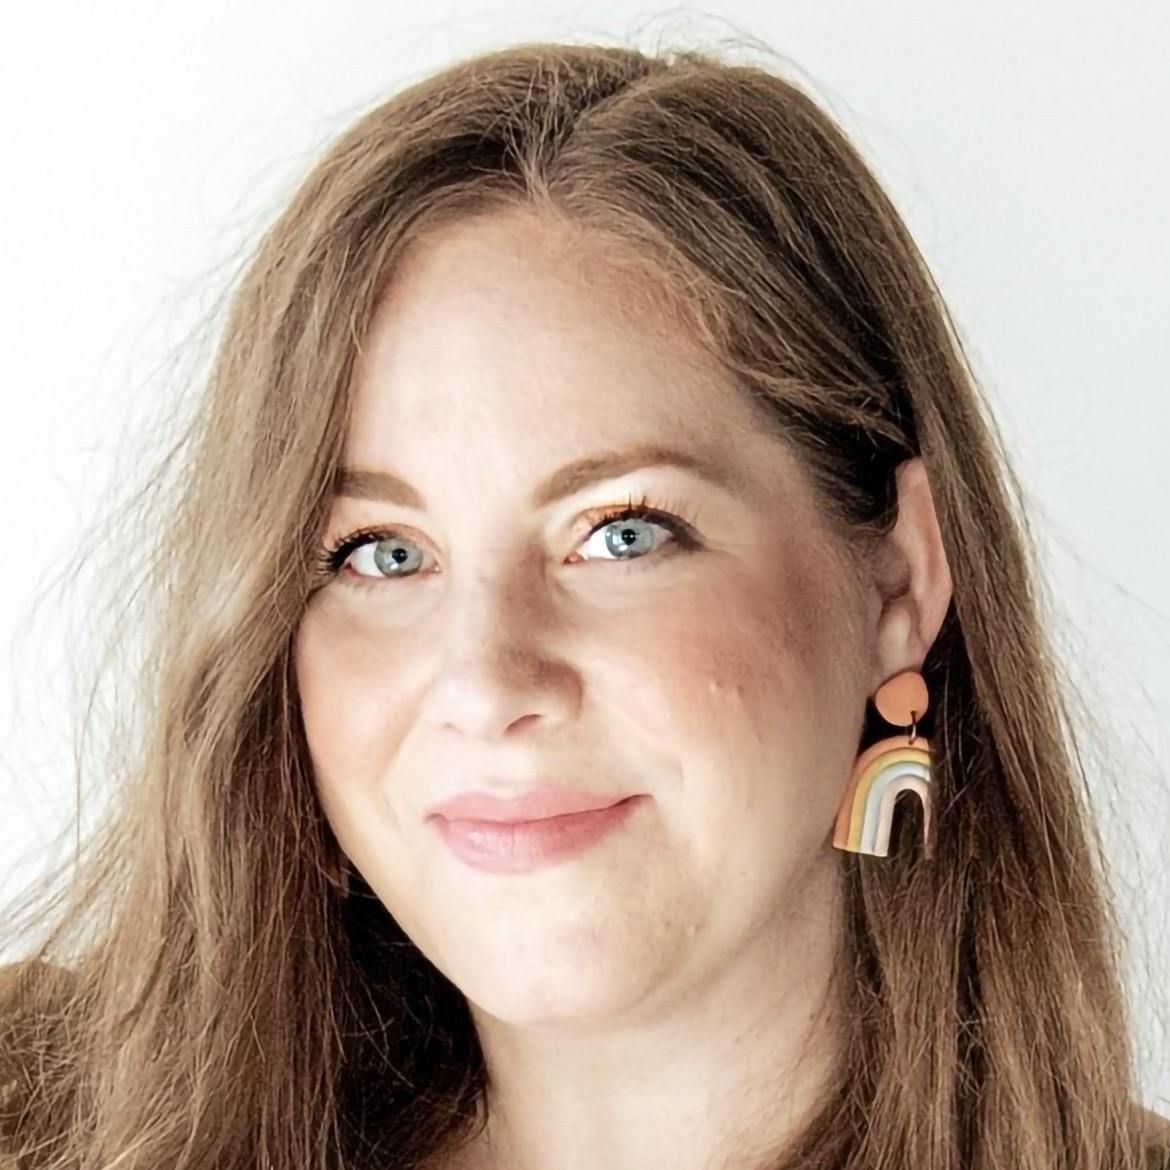 Cassandra Speer, "Her True Worth" co-author